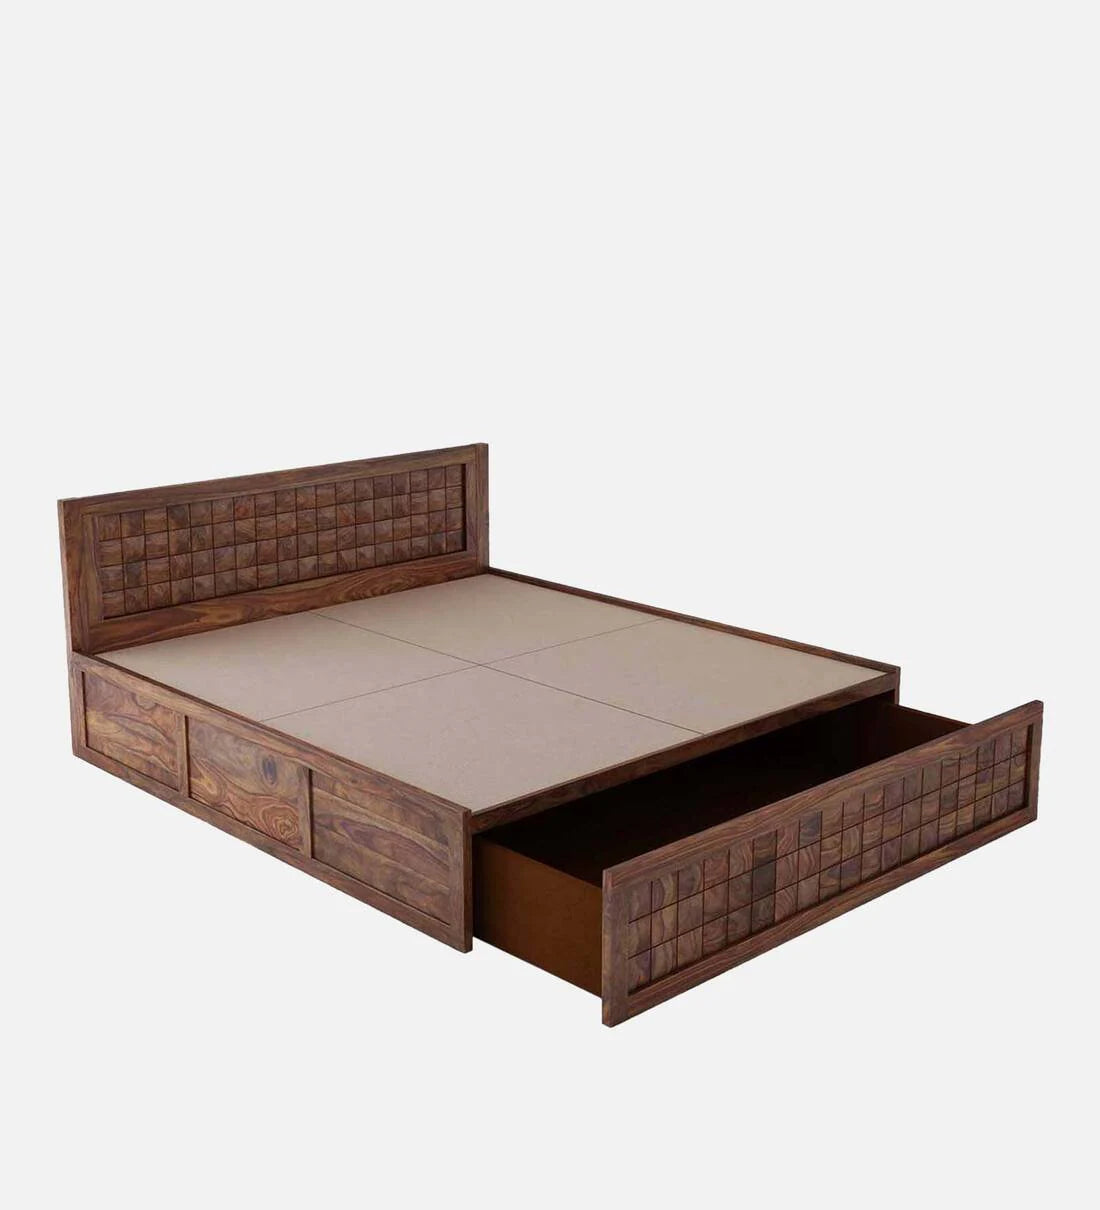 Sheesham Wood King Size Bed in Teak Finish with Drawer Storage